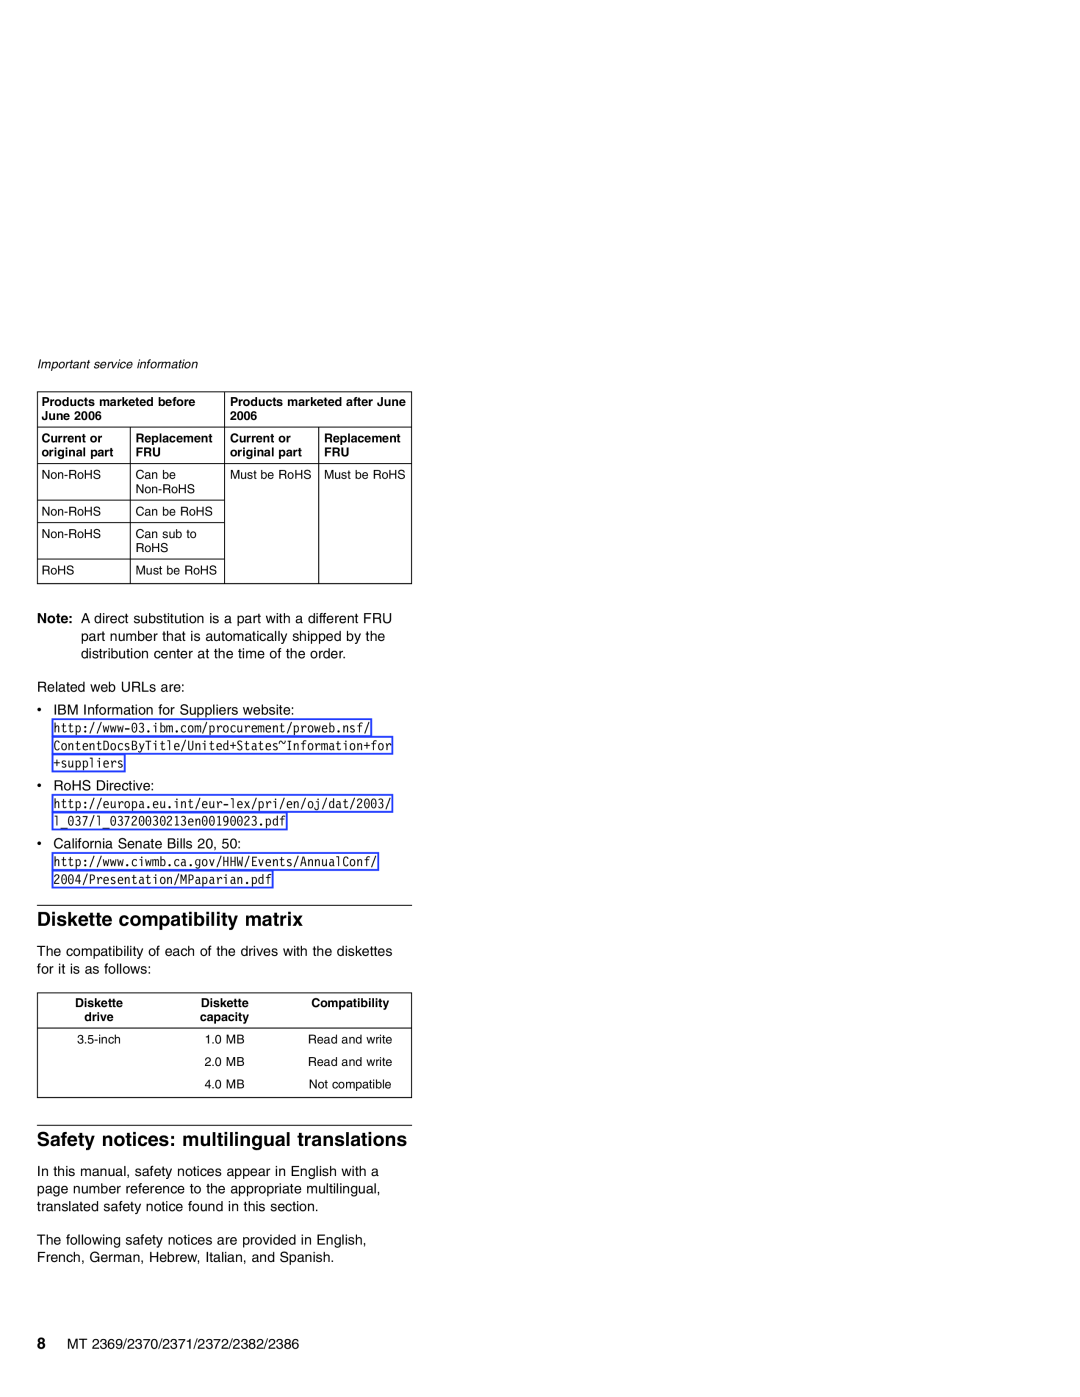 Lenovo MT 2369 manual Diskette compatibility matrix, Safety notices multilingual translations 